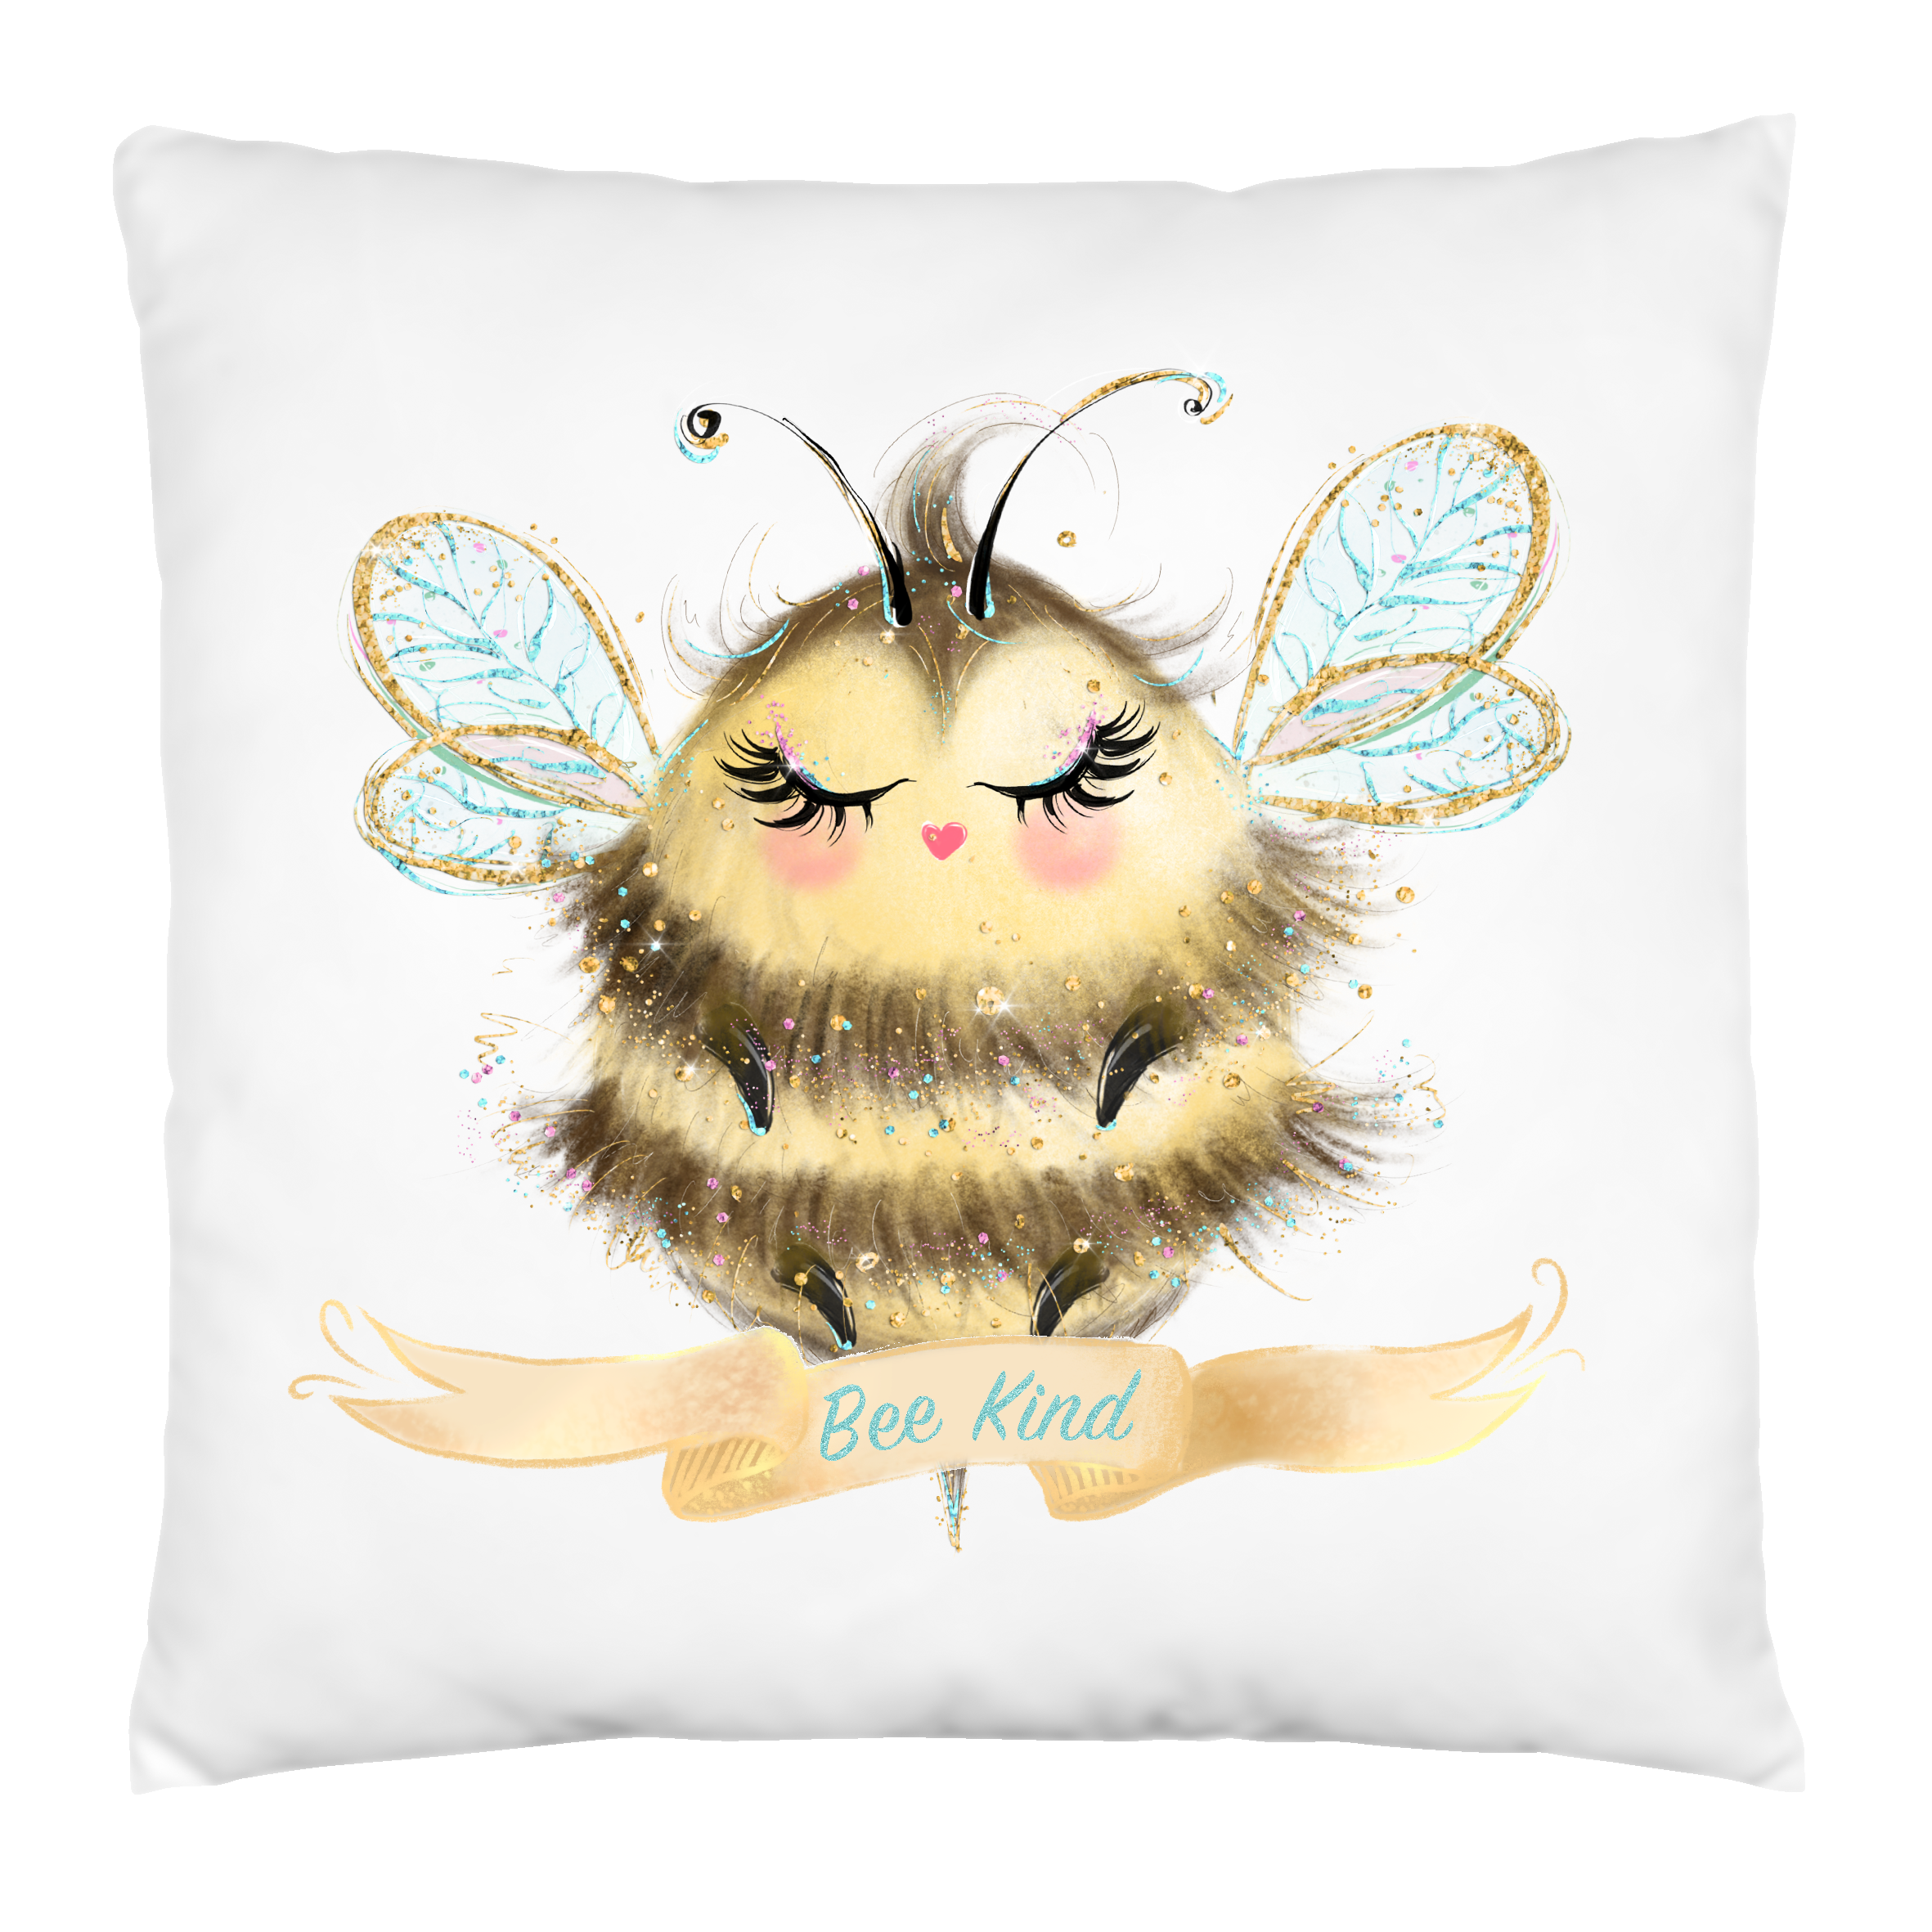 Bee Kind Cushion,Bee Cushion,Bee Cushion Cover,Pillow,Throw,Bee Gift,Home Decor,Home Interiors